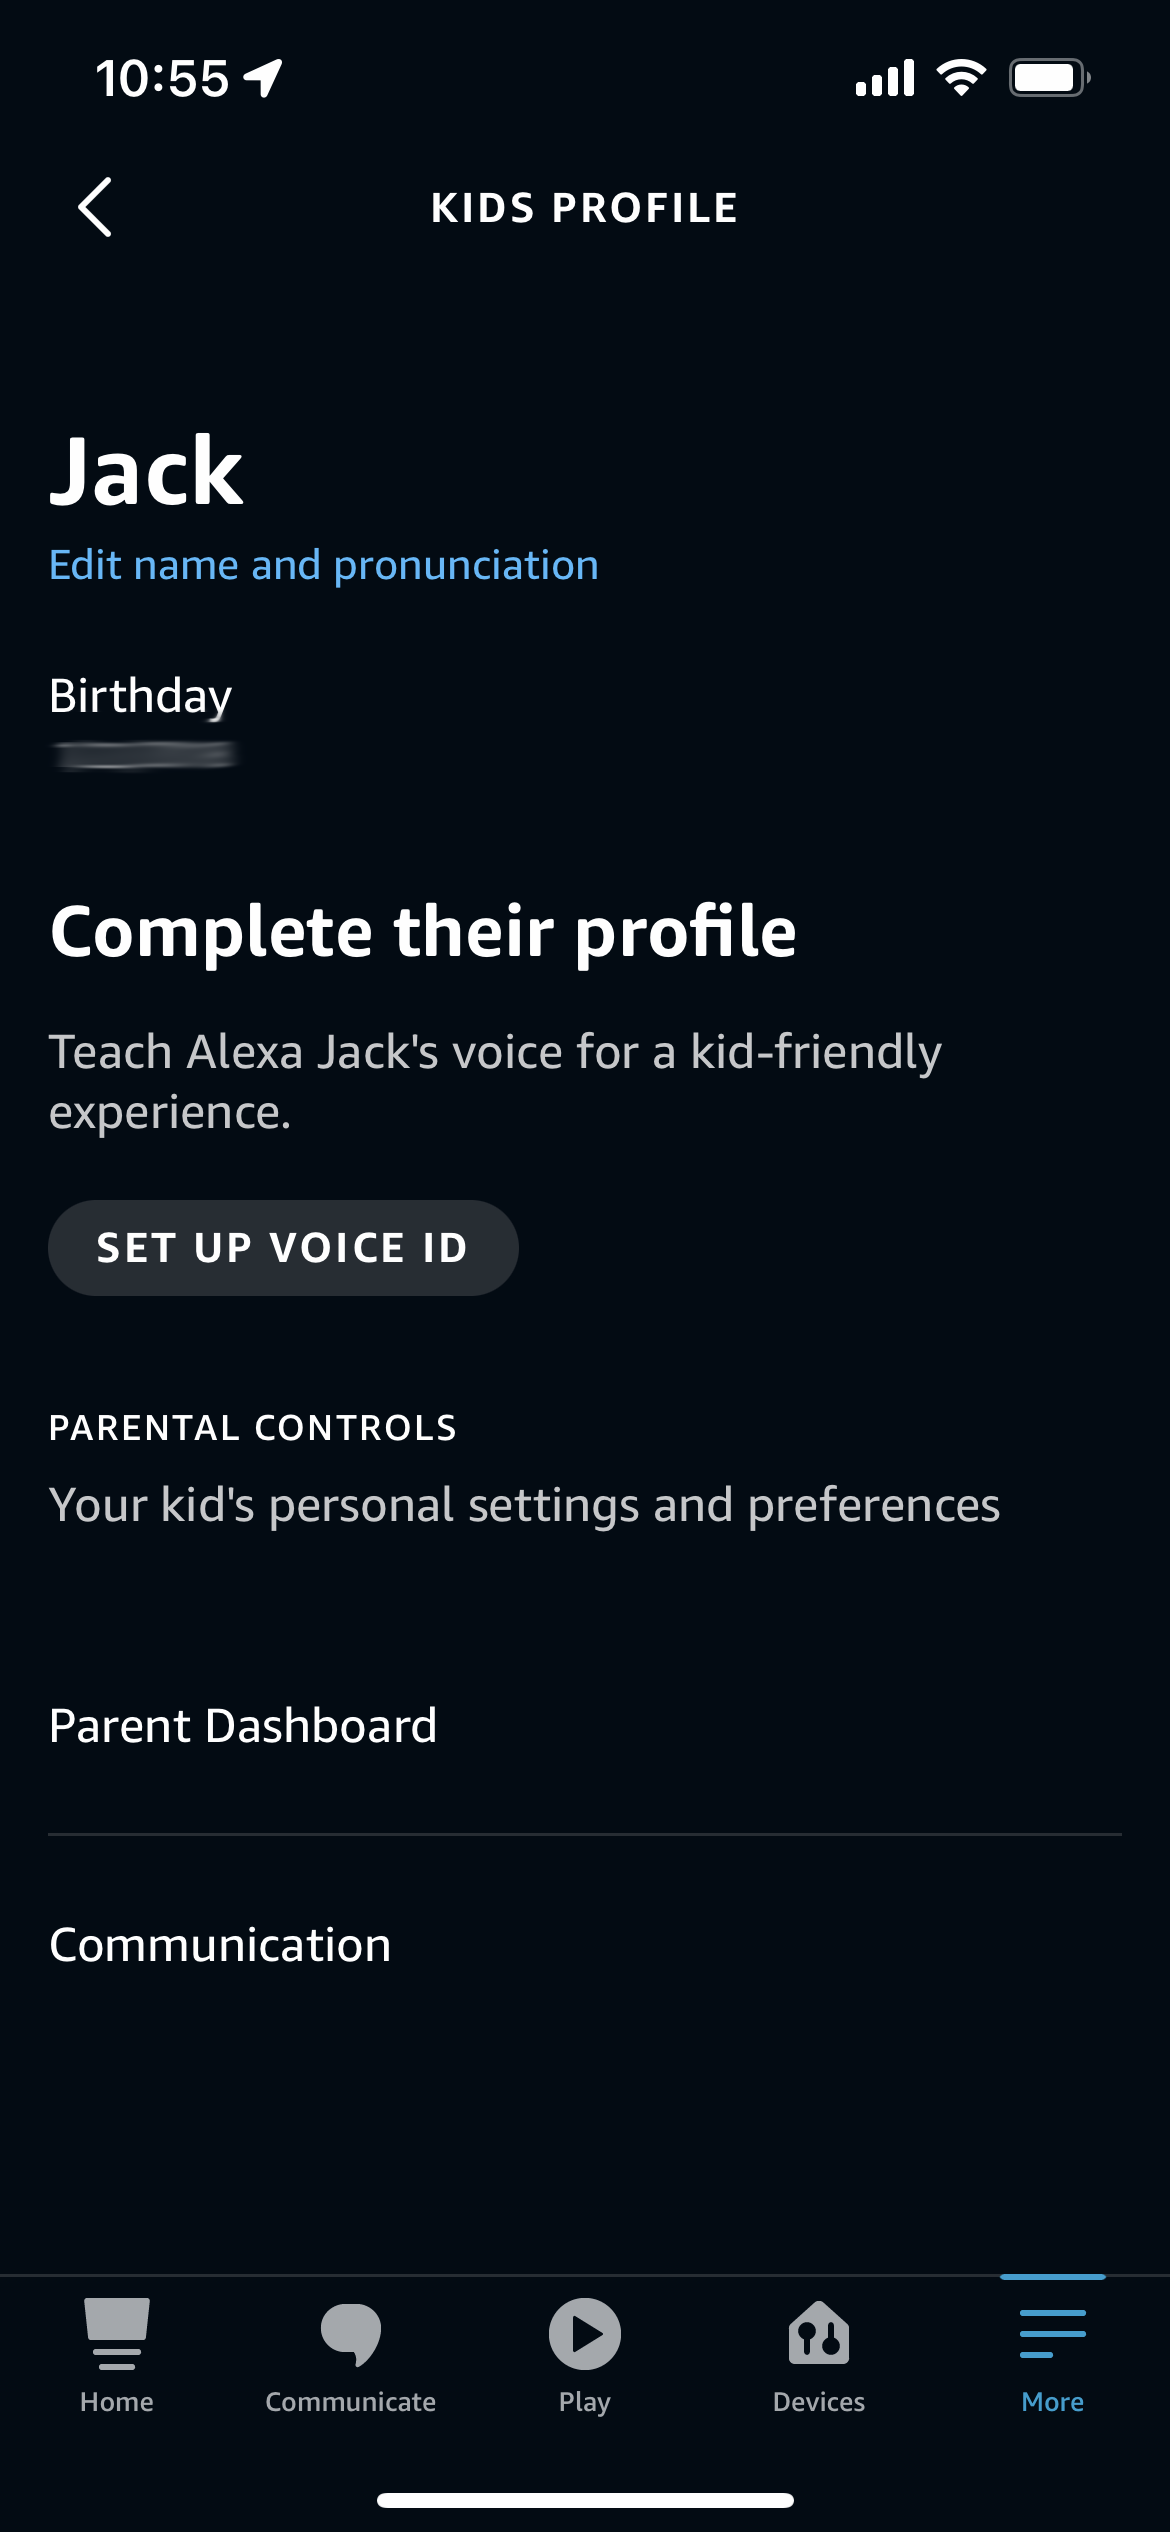 A kid's profile in the Alexa app